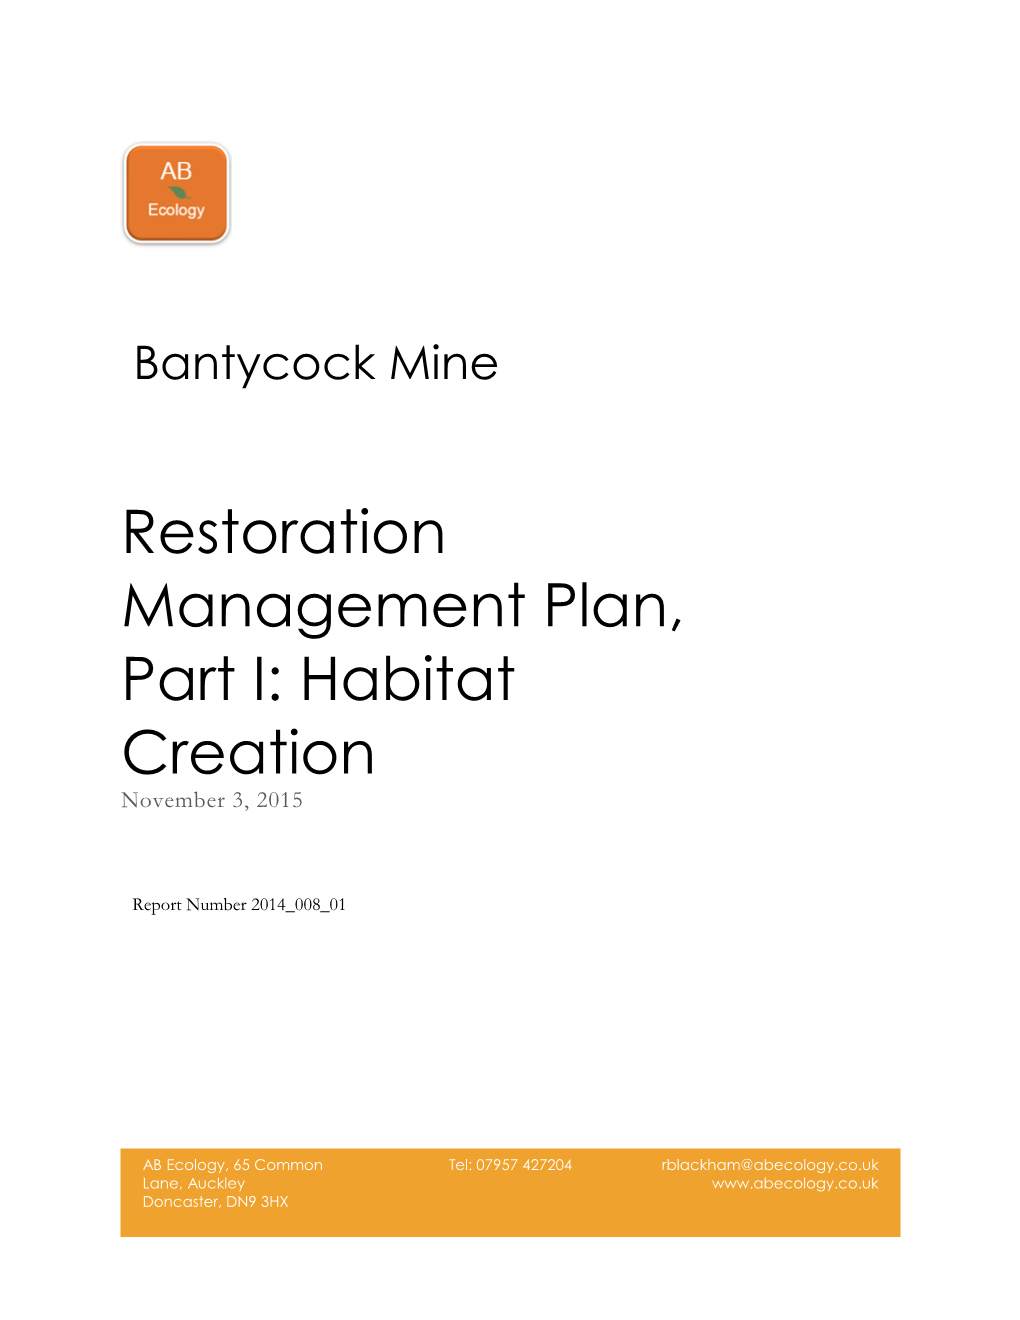 Restoration Management Plan, Part I: Habitat Creation November 3, 2015